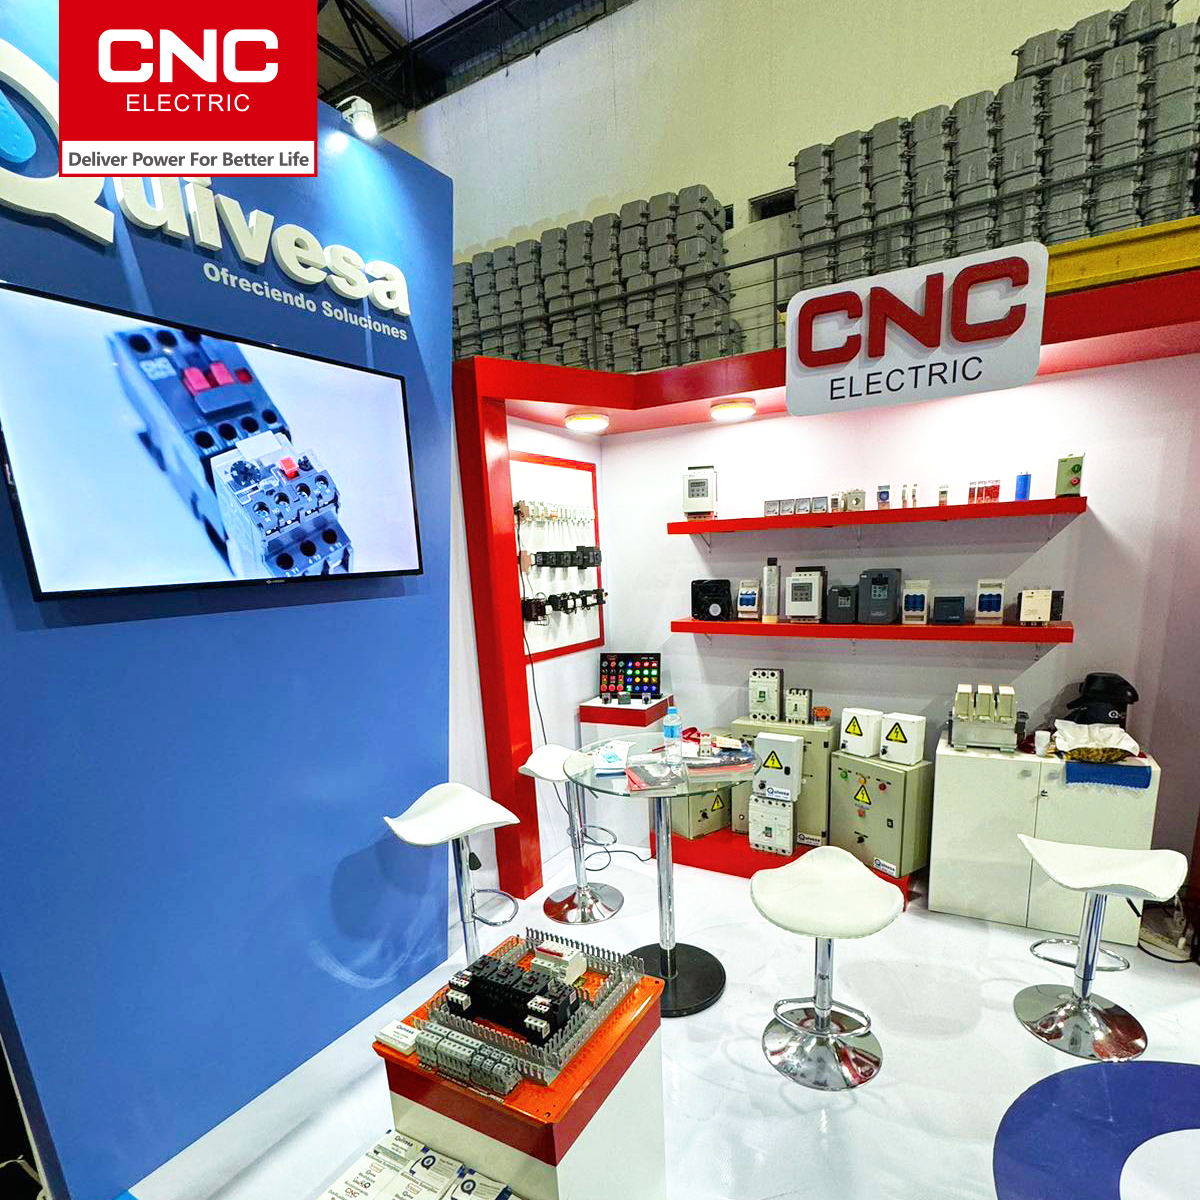 CNC |CNC Electric na izložbi u Paragvaju